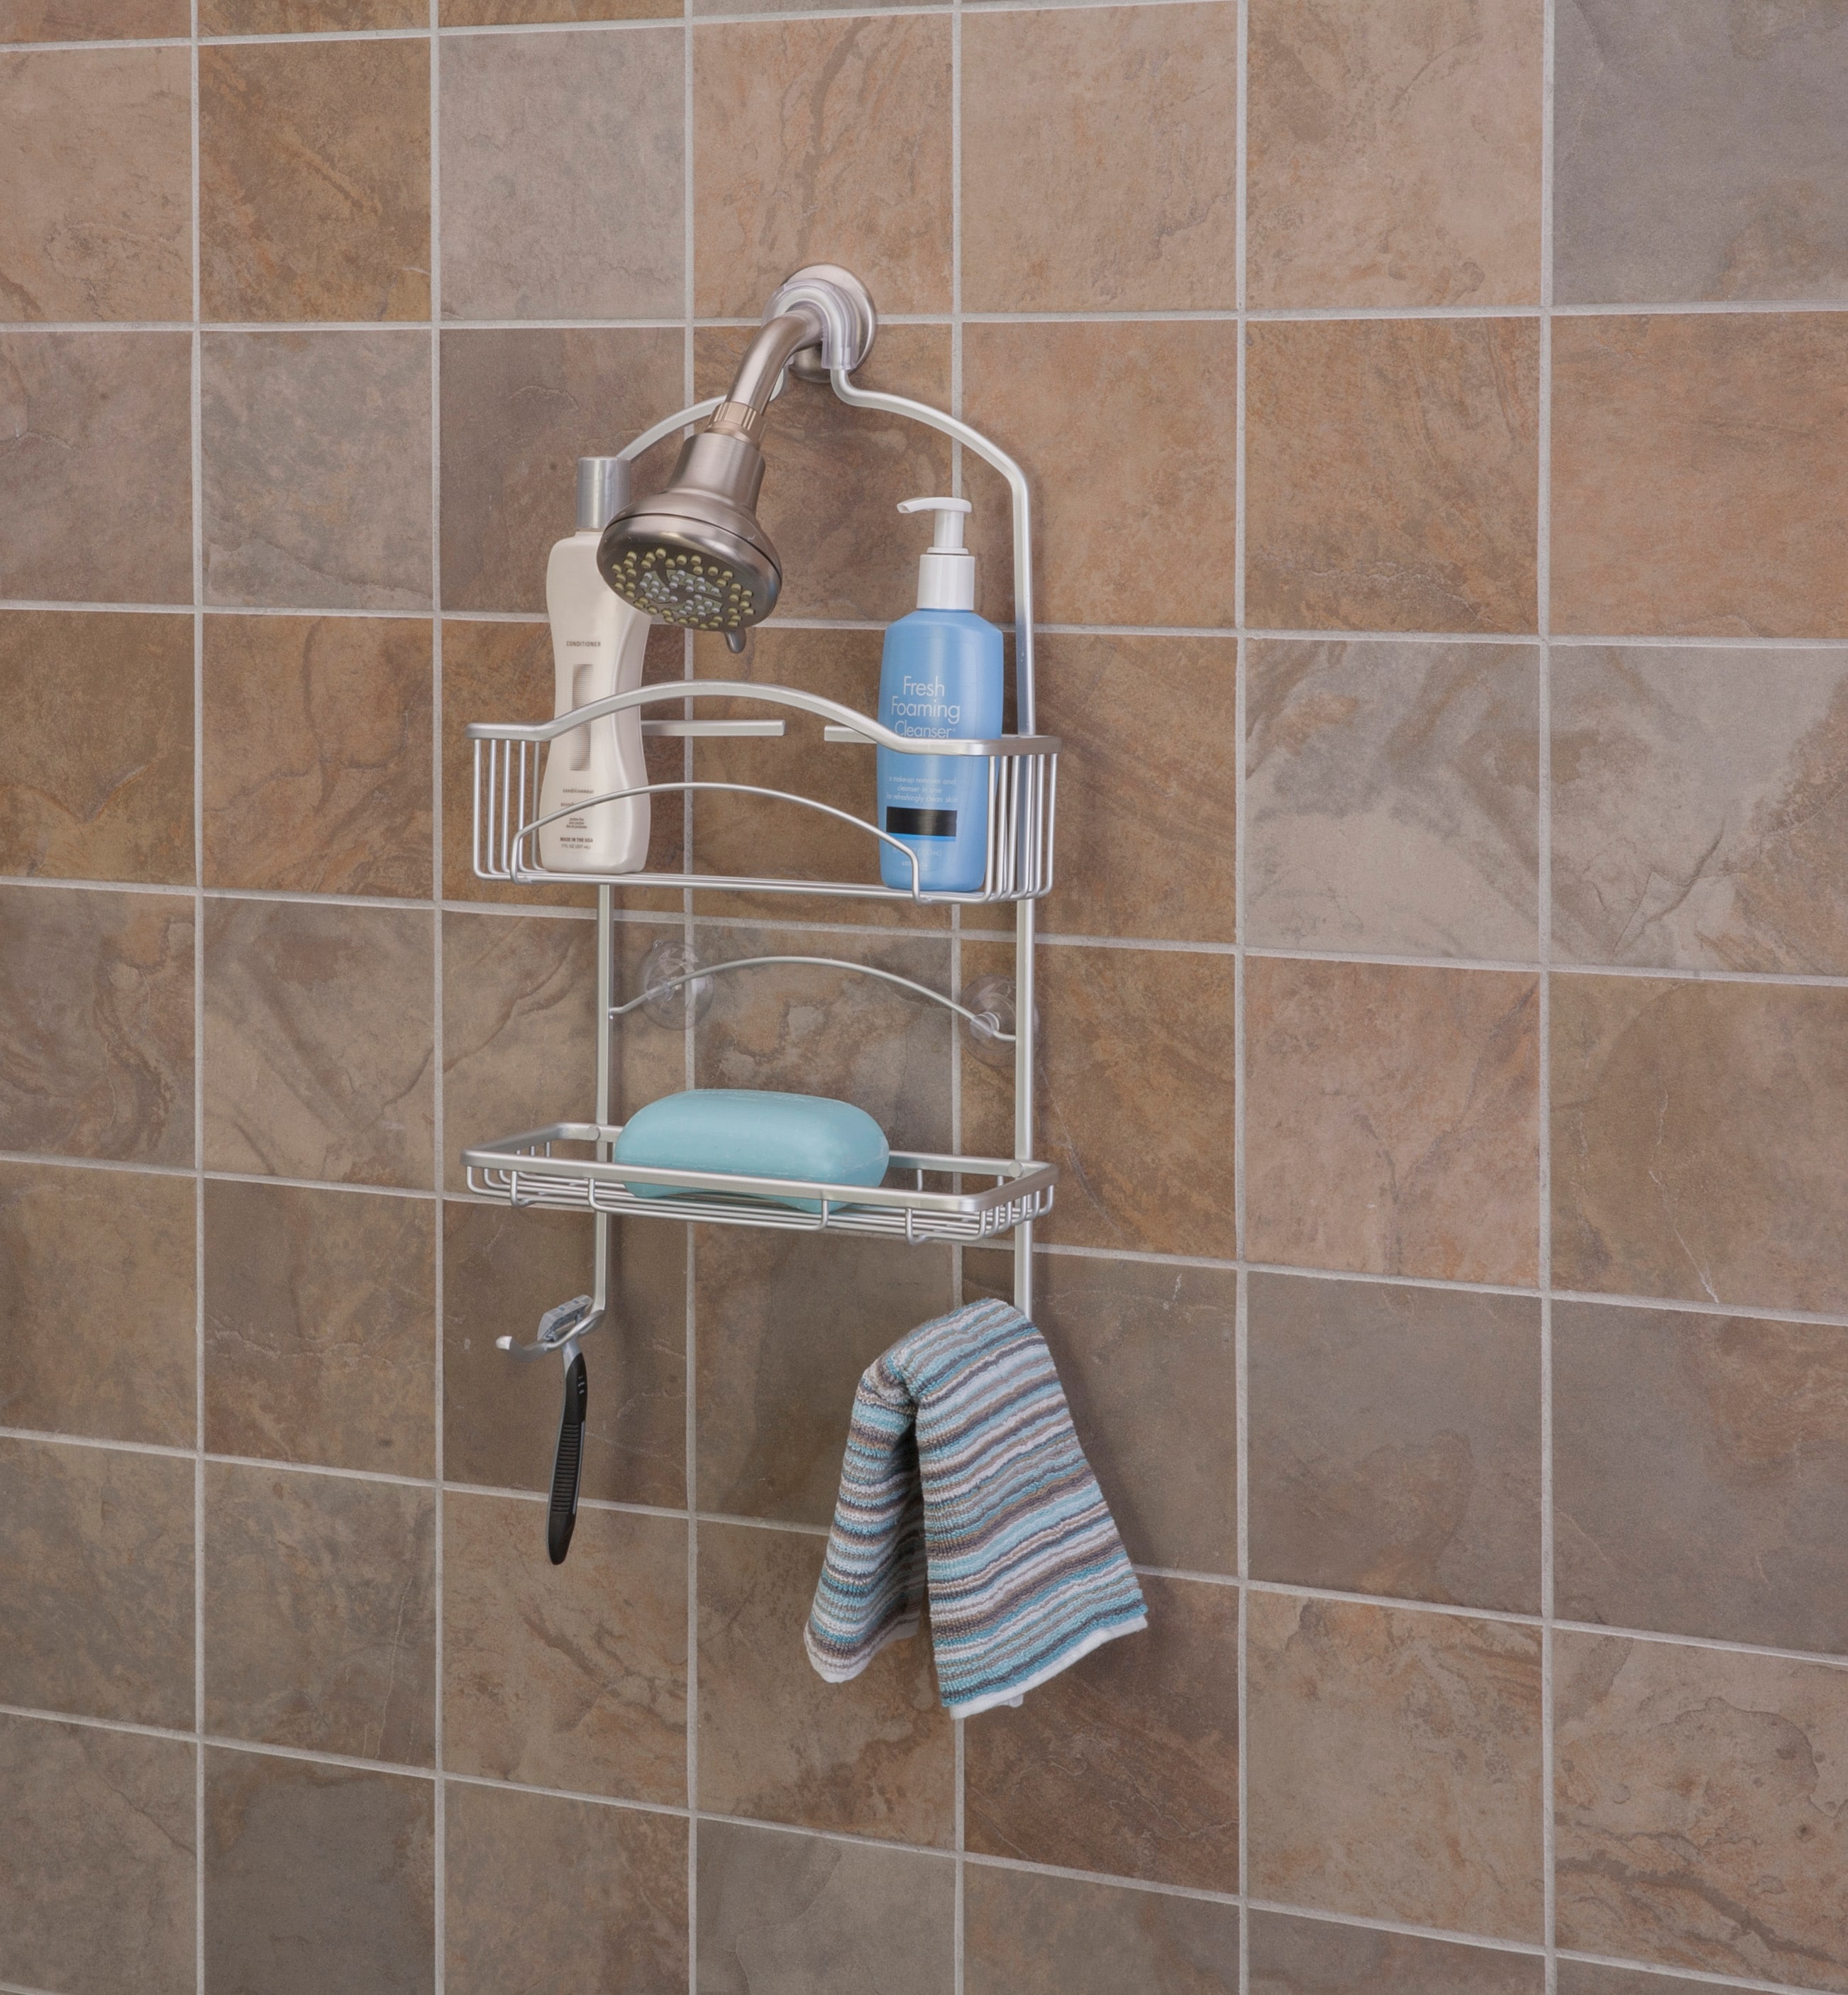 iDesign Nickel Steel 2-Shelf Hanging Shower Caddy 12-in x 9.5-in x 17.25-in  in the Bathtub & Shower Caddies department at